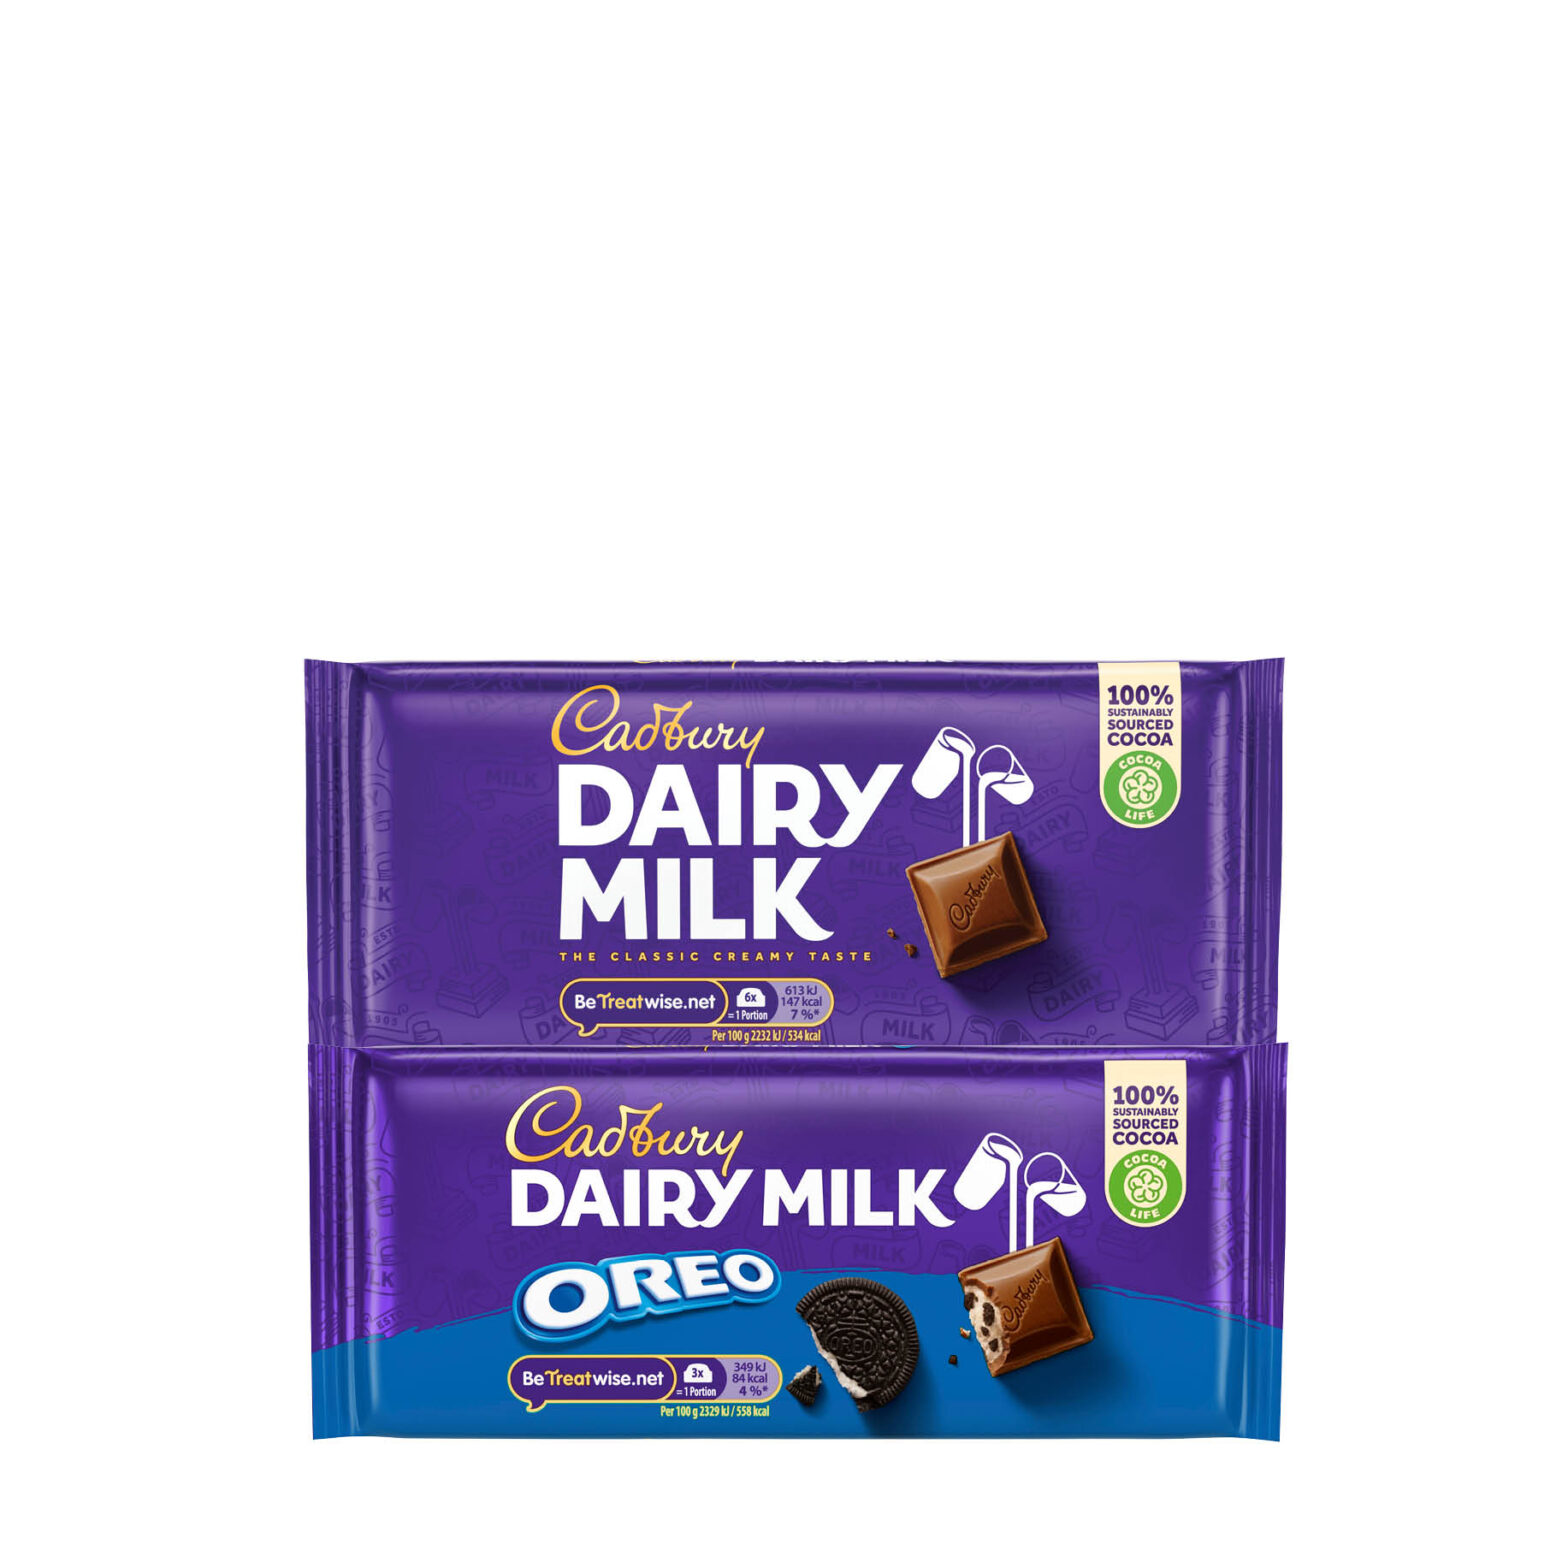 Cadbury Dairy Milk Bar / Cadbury Dairy Milk Oreo Bar